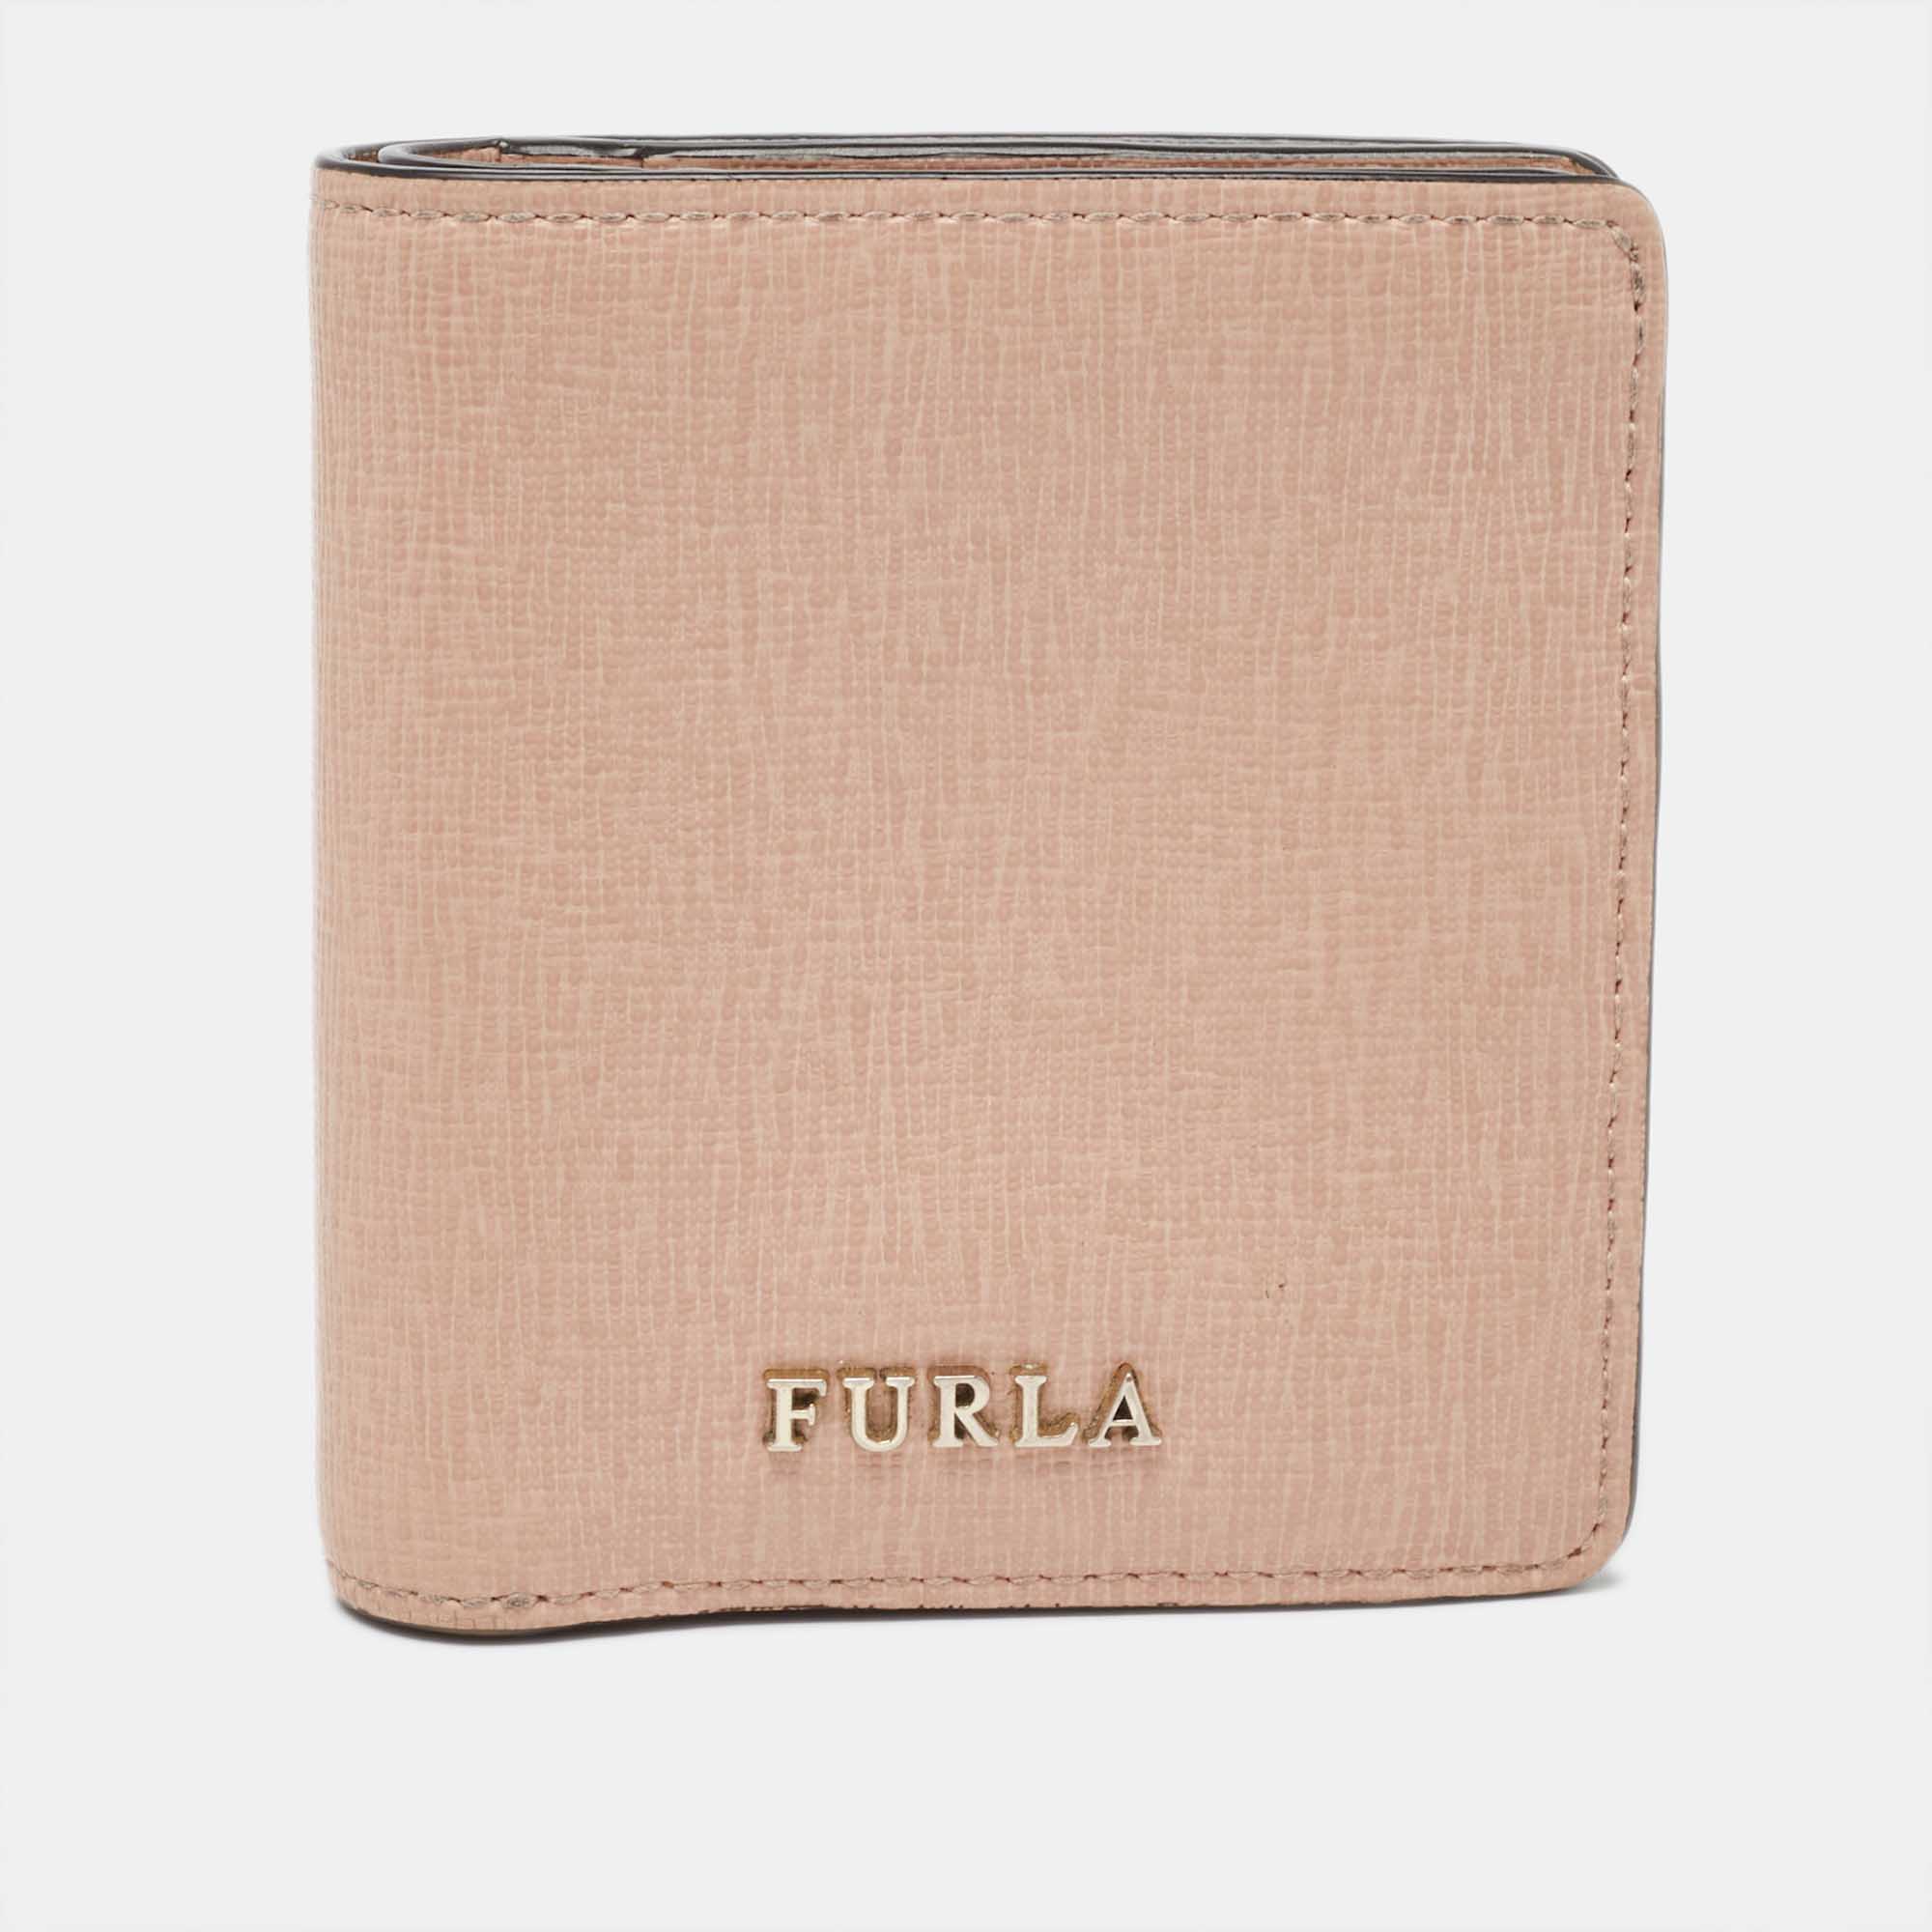 Furla light pink leather logo bifold wallet